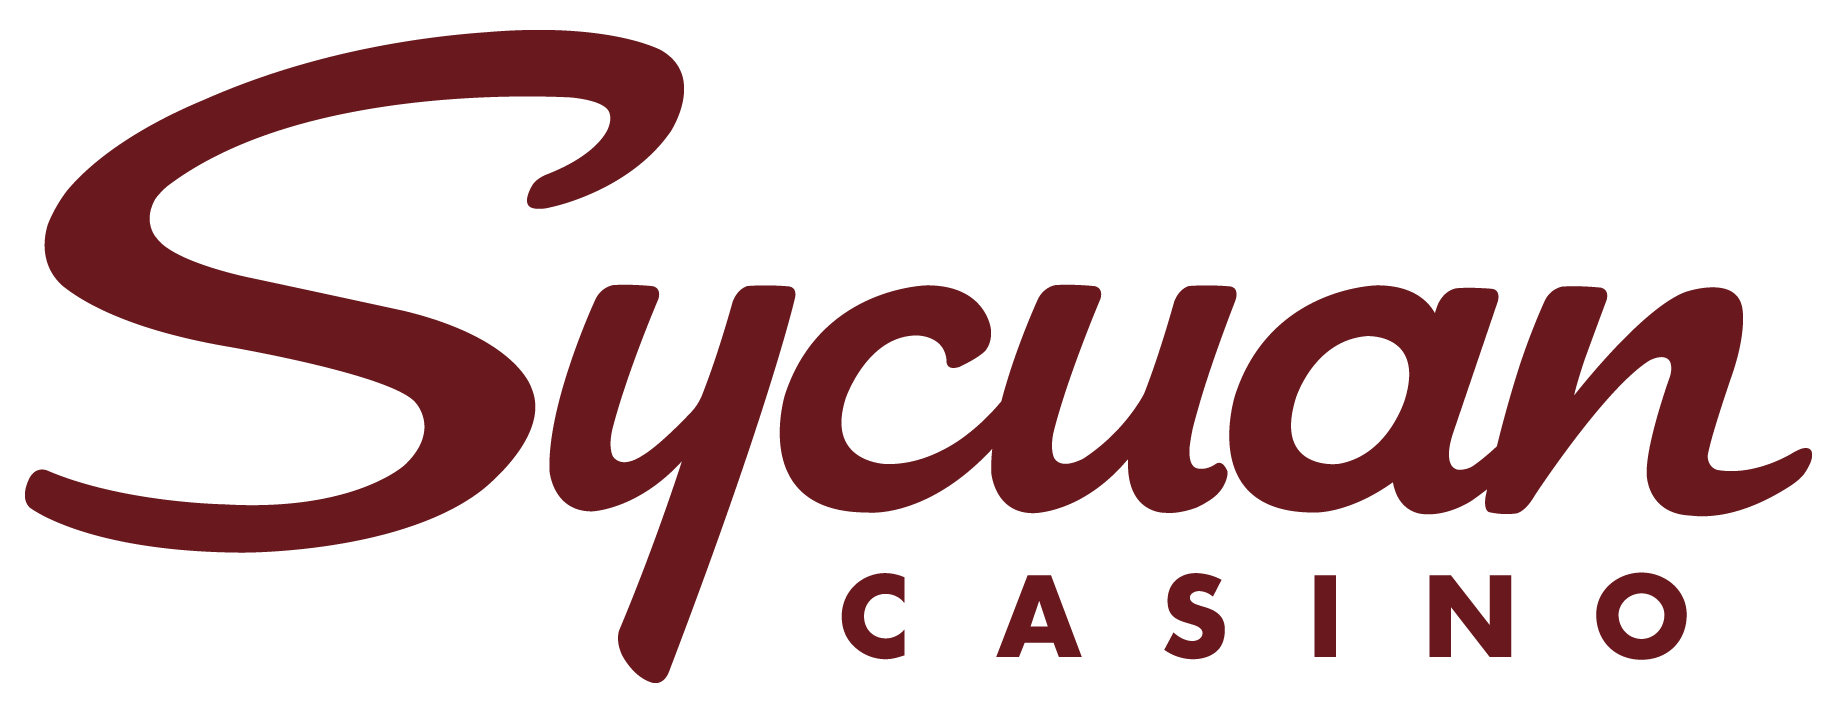 Sycuan Casino logo